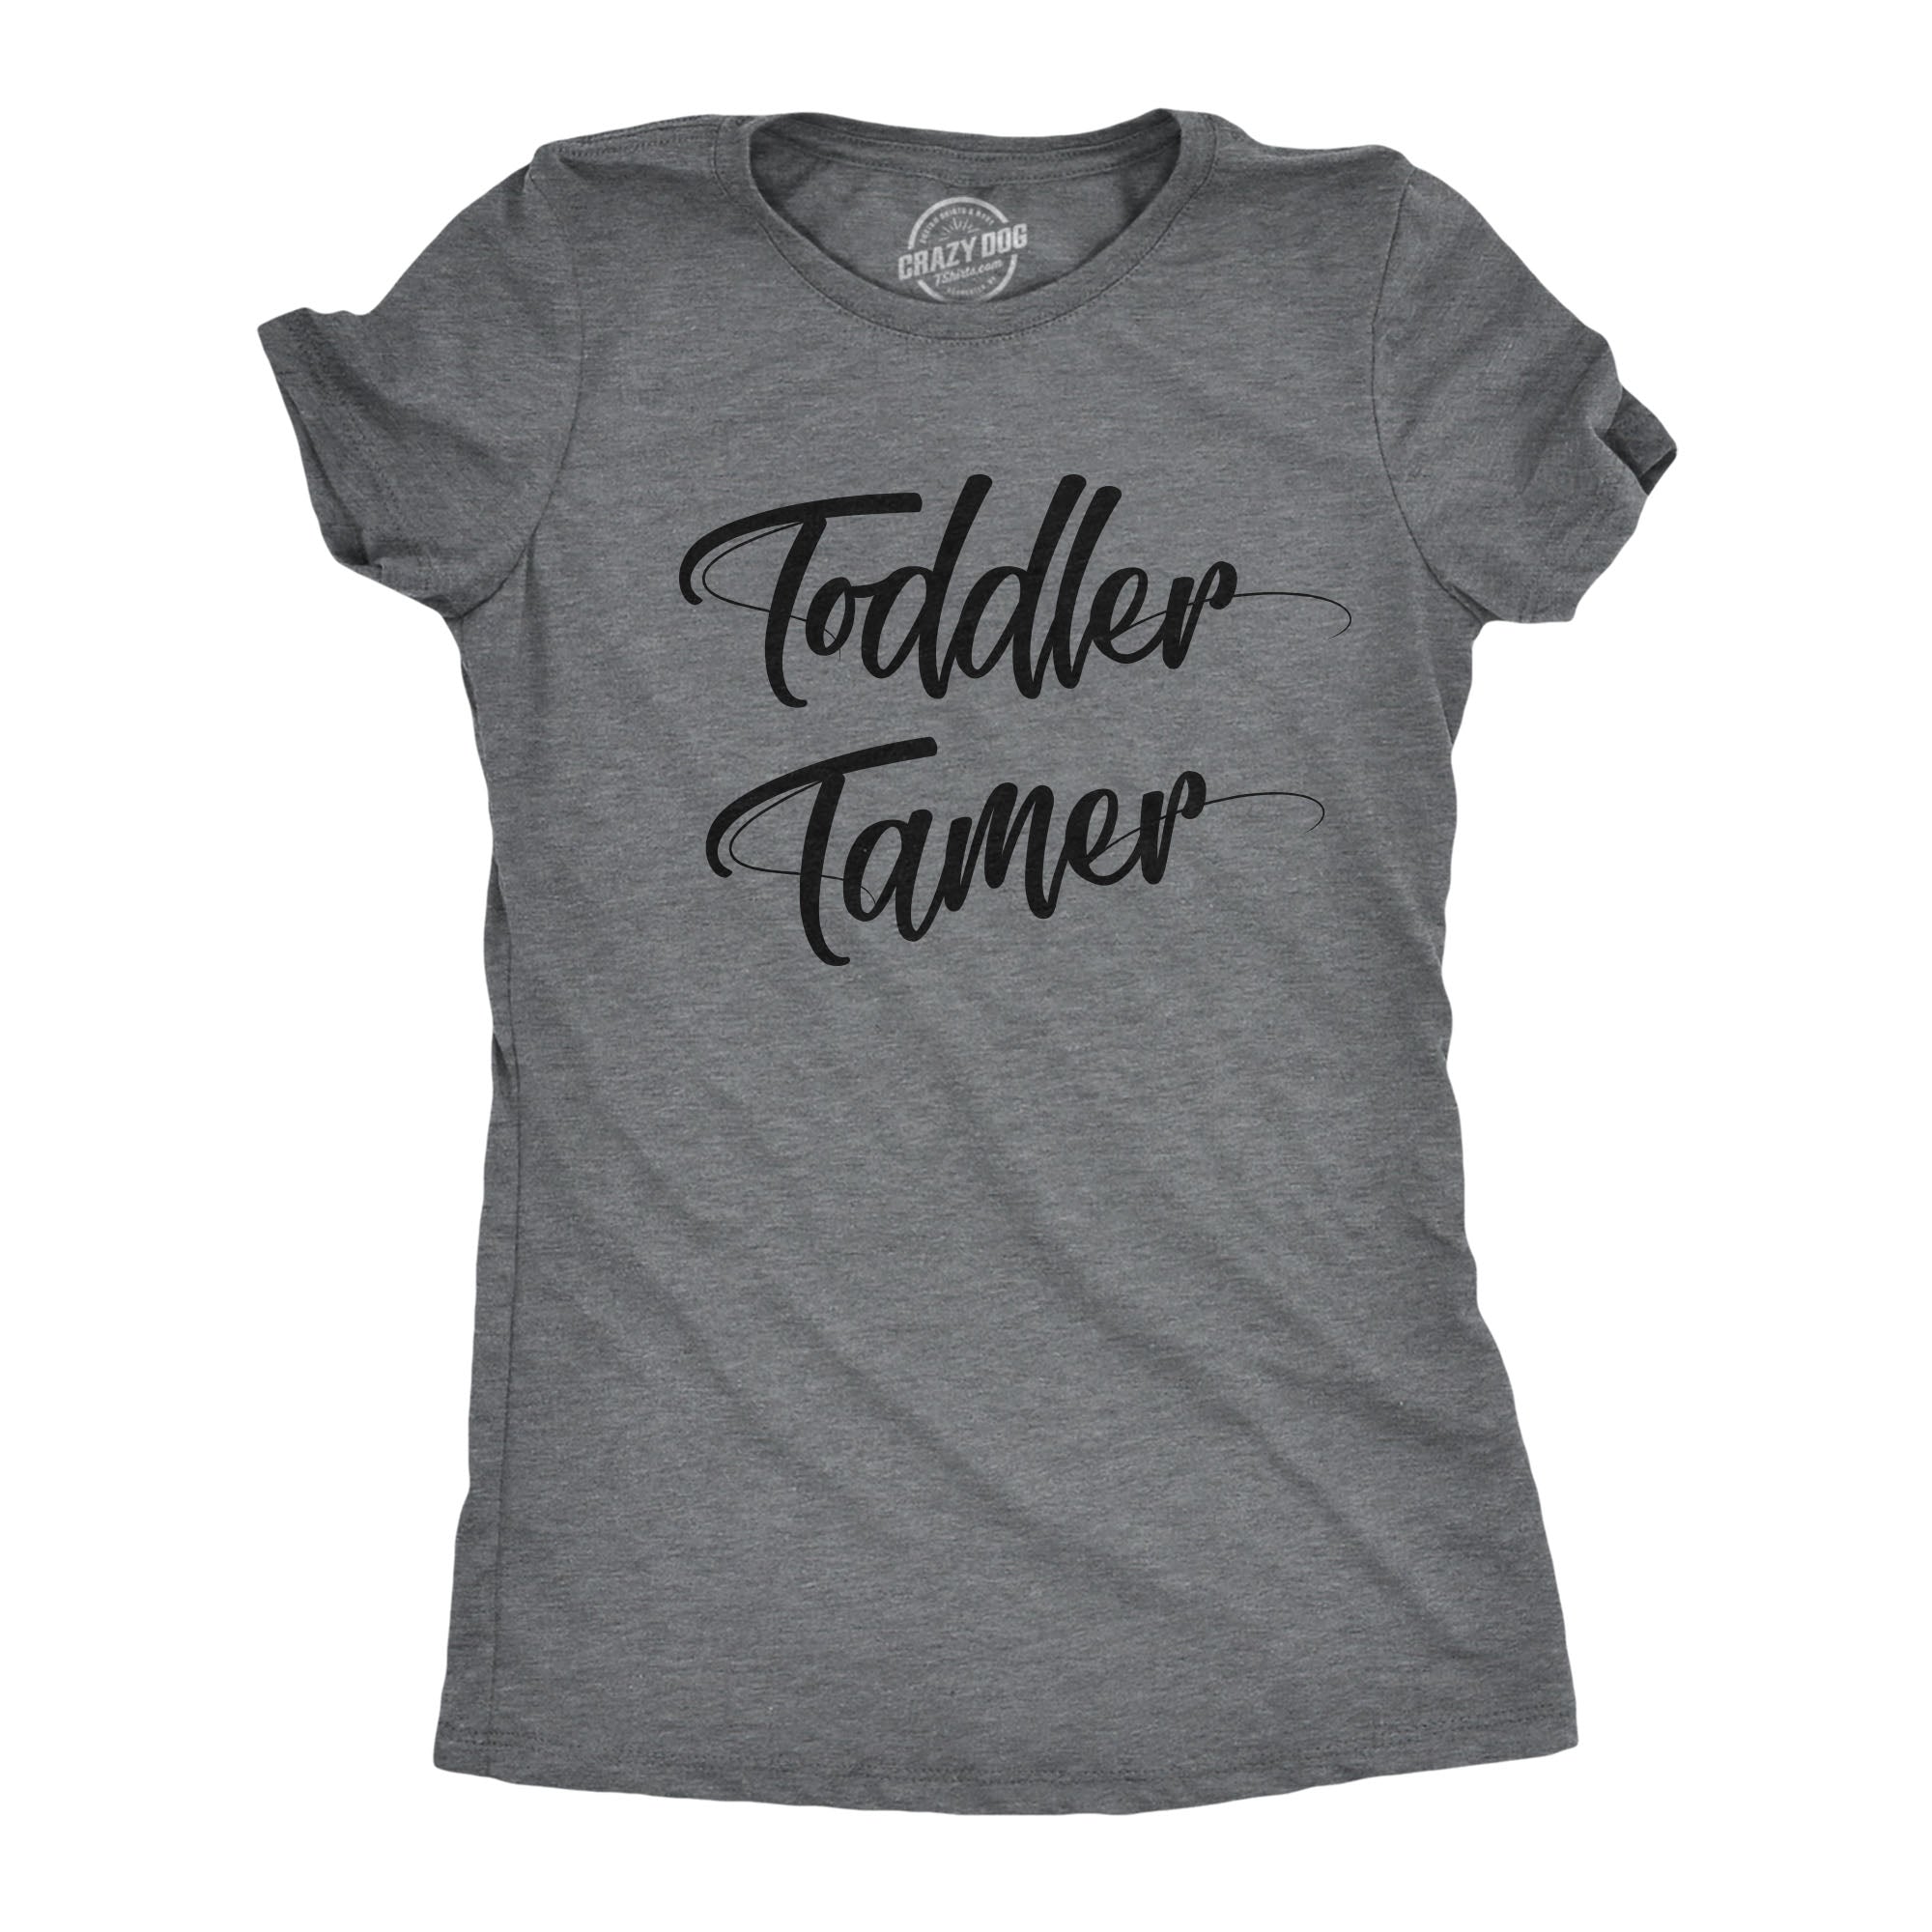 Funny Dark Heather Grey - TODDLER Toddler Tamer Womens T Shirt Nerdy Sarcastic Tee